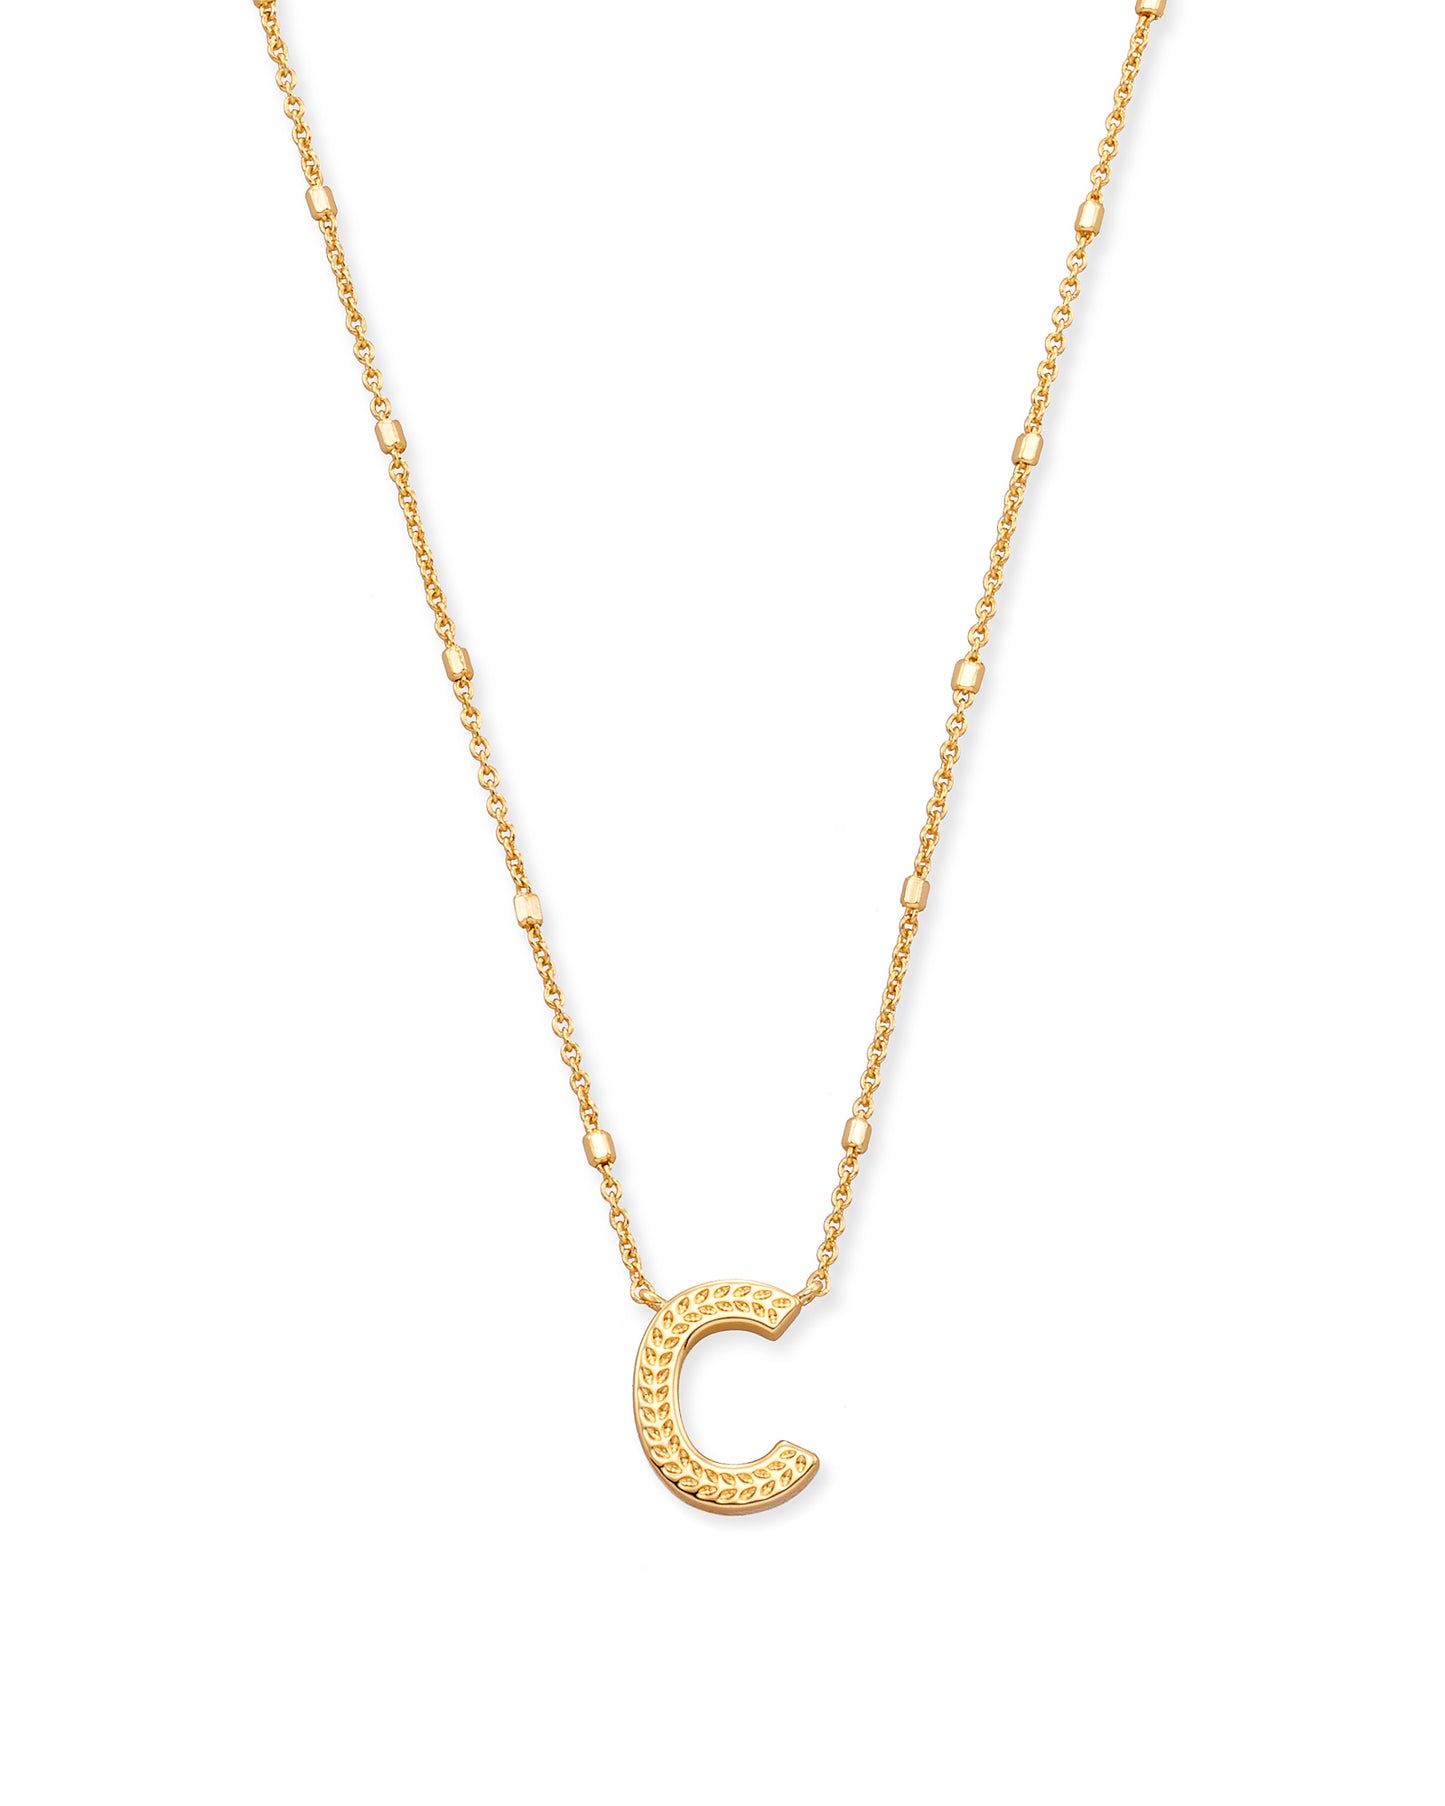 Kendra Scott Initial Pendant Necklace - Gold